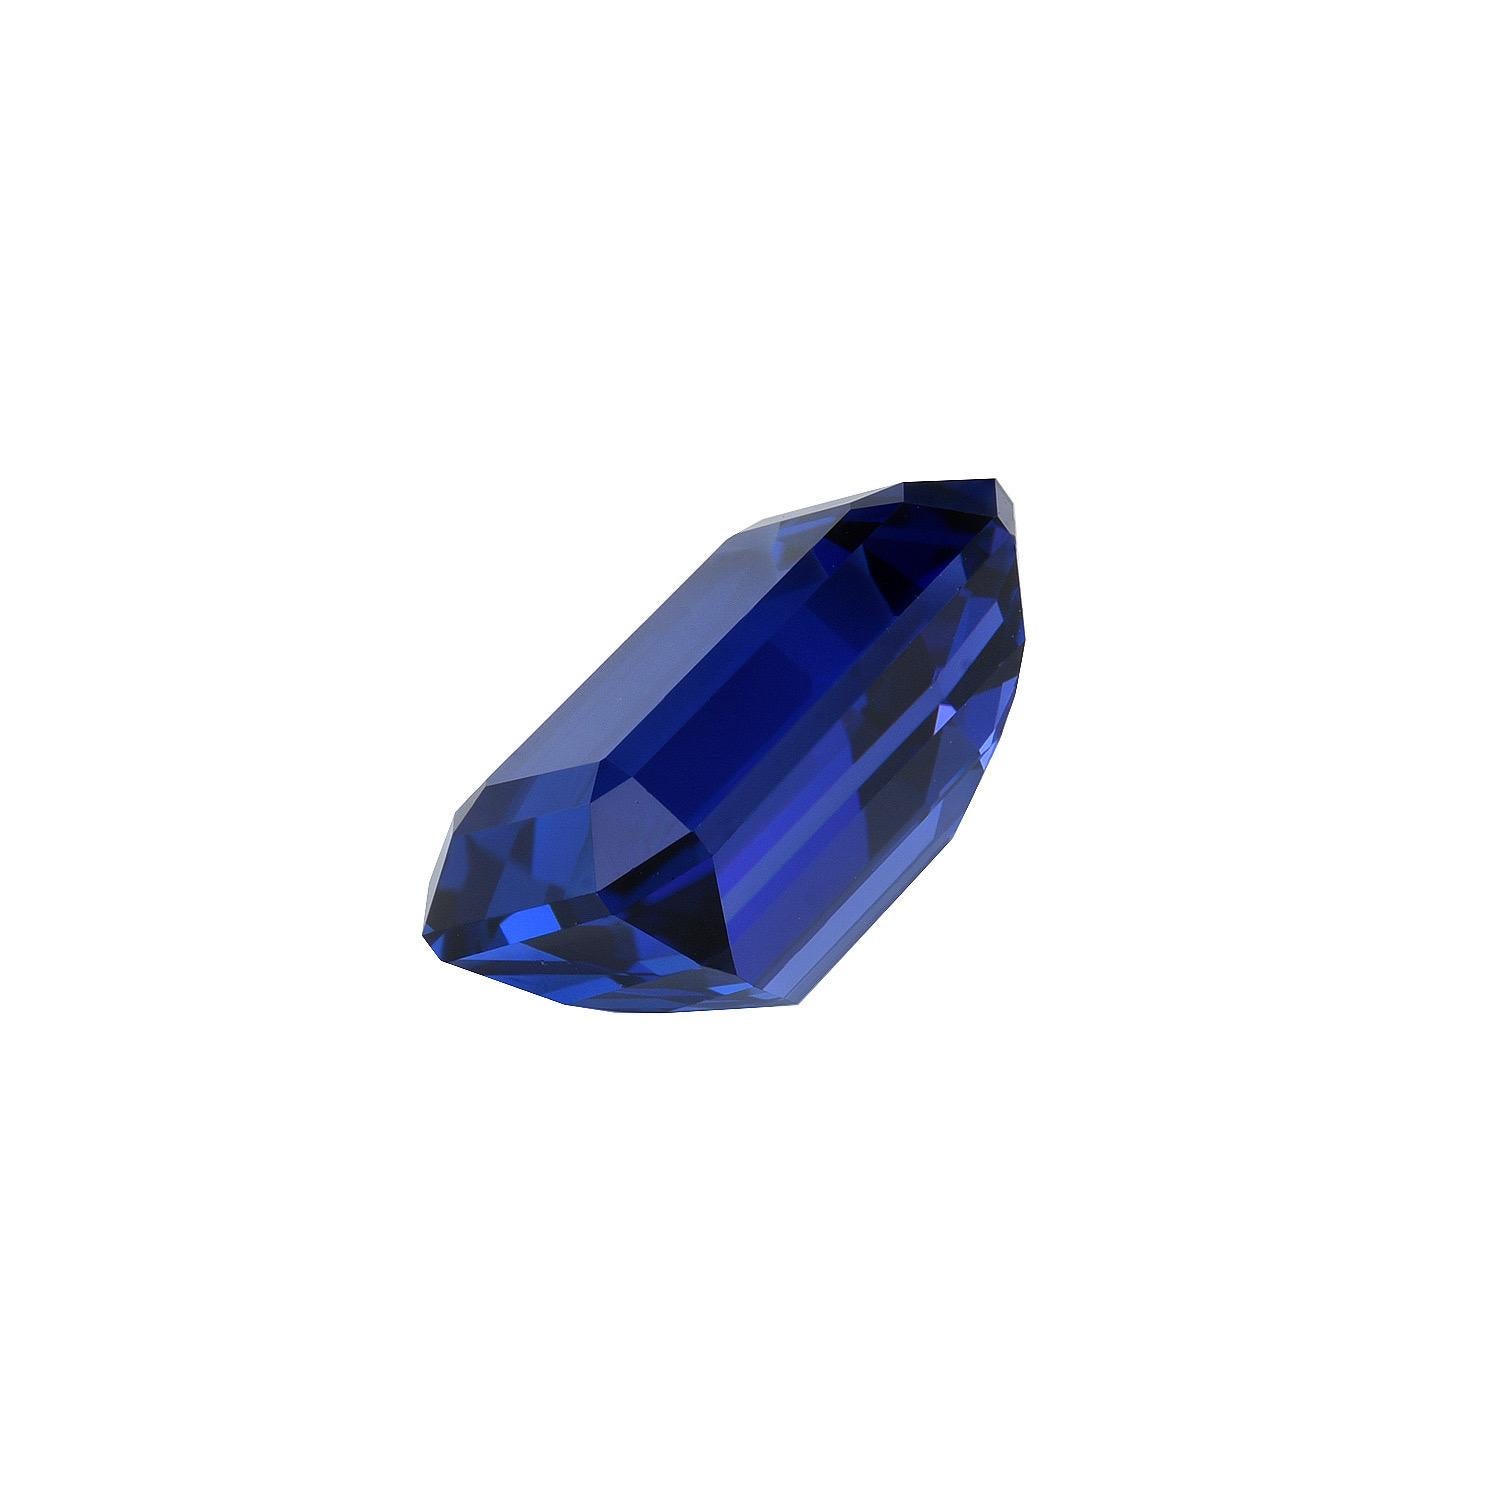 Contemporary Tanzanite Ring Gem 6.37 Carat Emerald Cut Unmounted Loose Gemstone